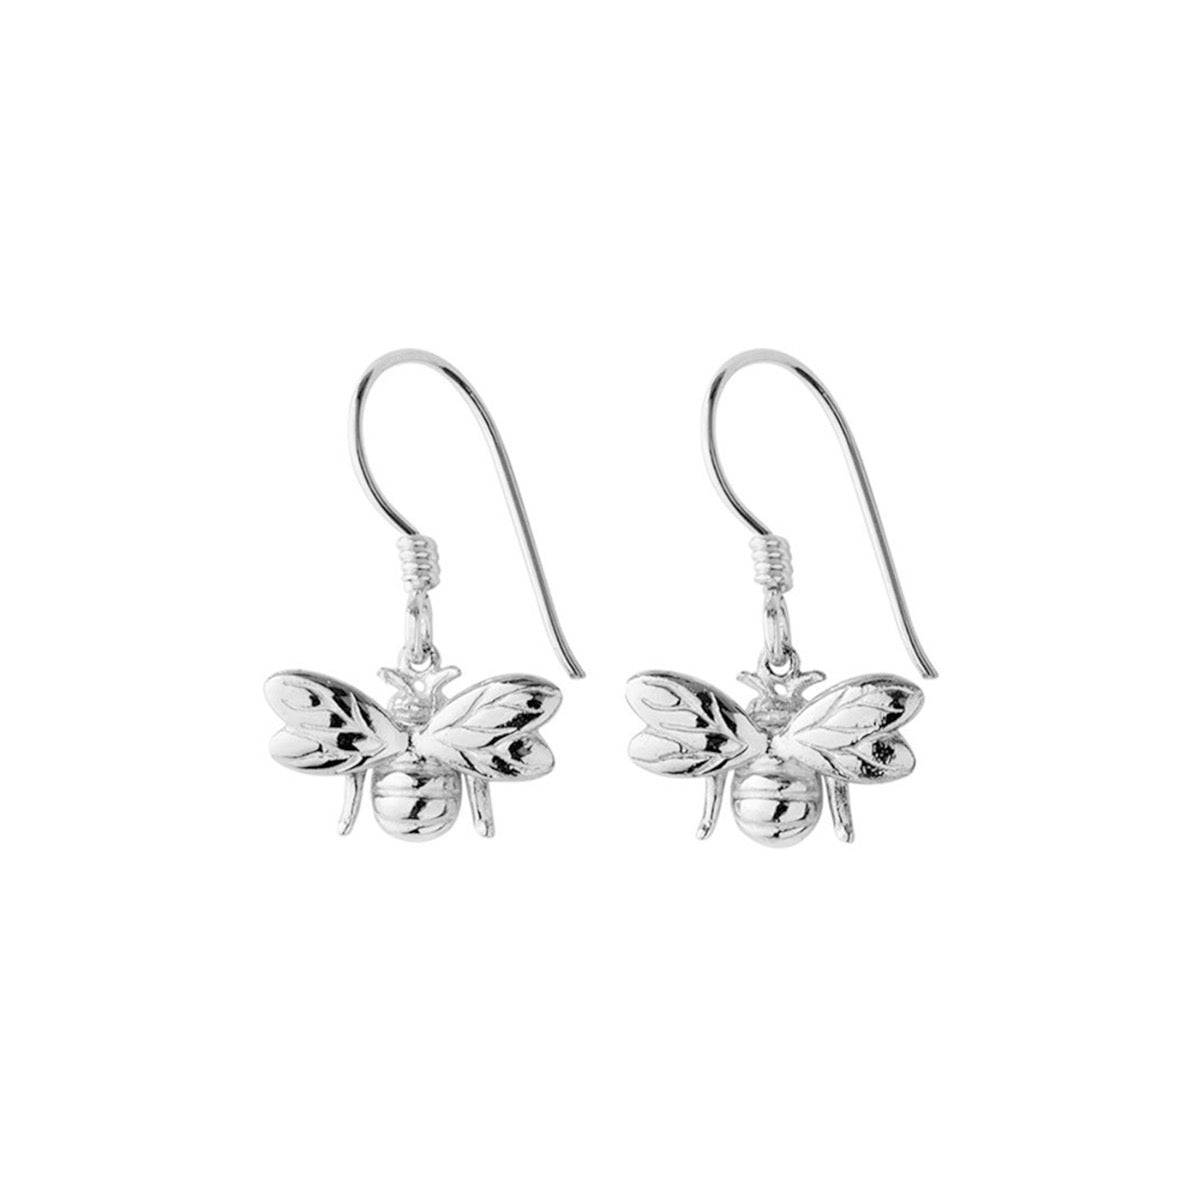 Silver bumble bee earrings